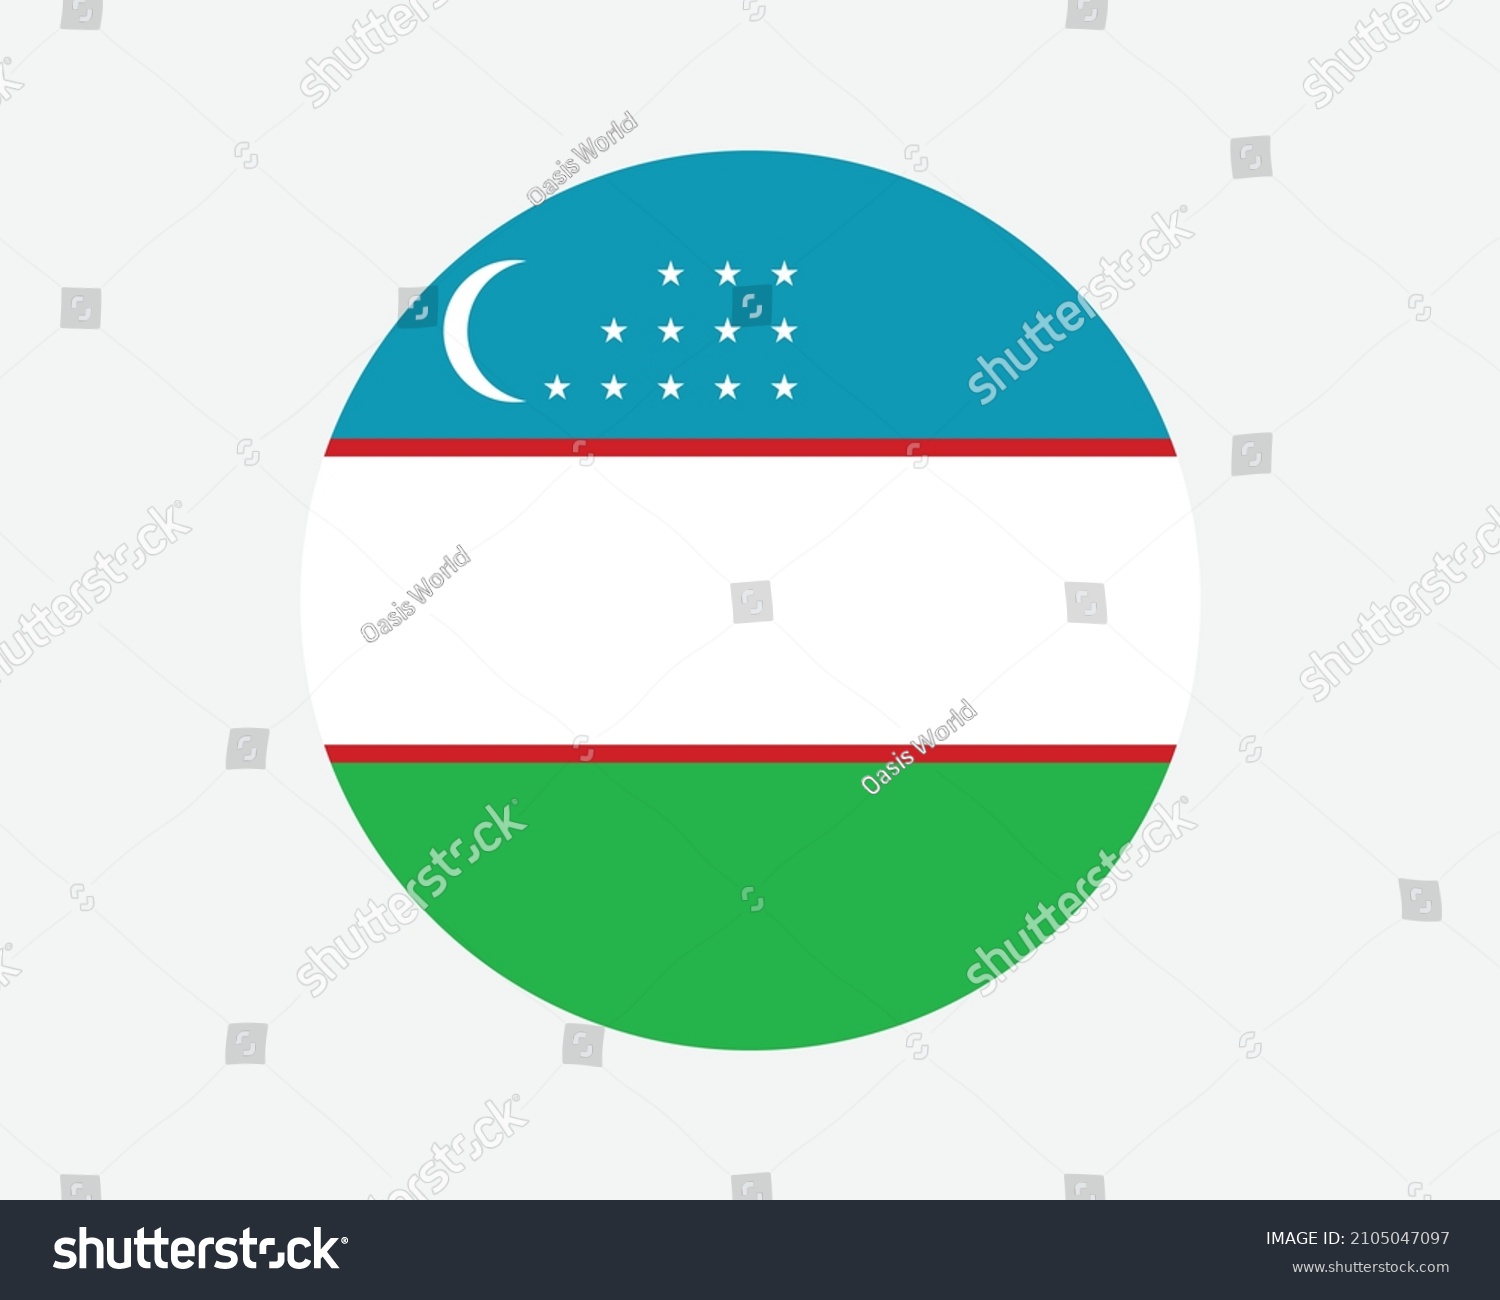 SVG of Uzbekistan Round Country Flag. Uzbekistani Uzbek Circle National Flag. Republic of Uzbekistan Circular Shape Button Banner. EPS Vector Illustration. svg